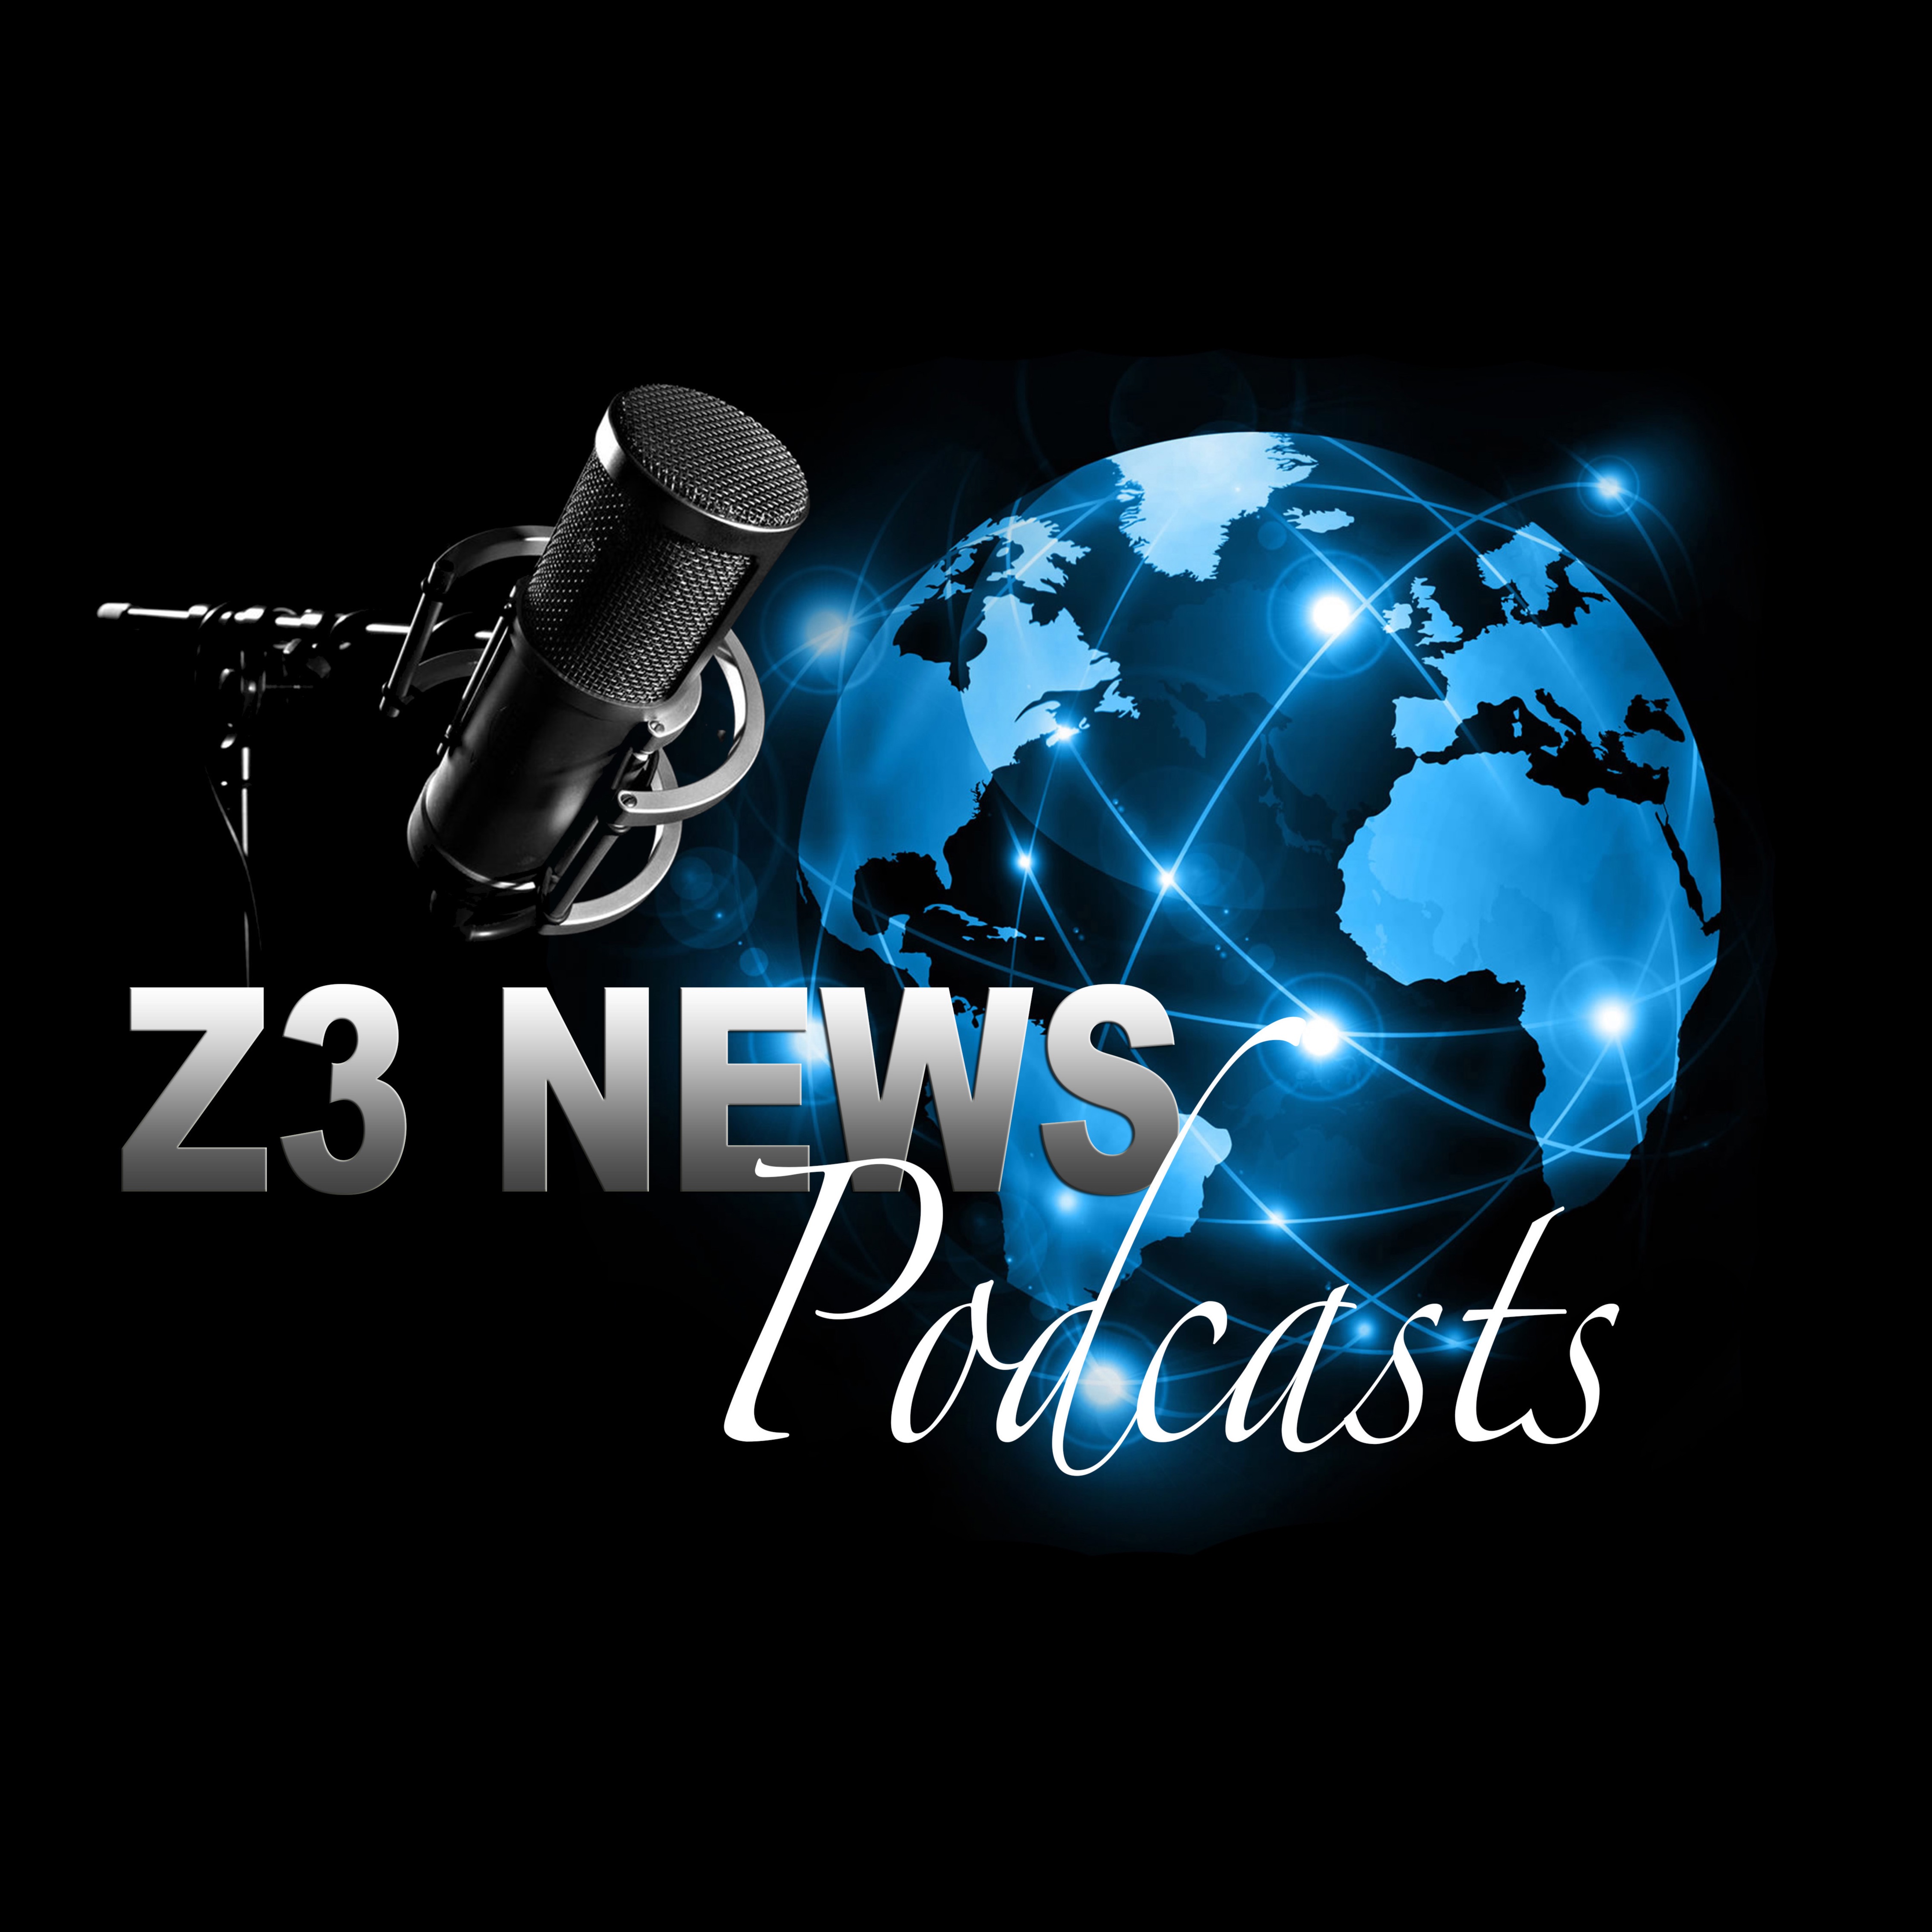 Z3 News Podcasts podcast show image